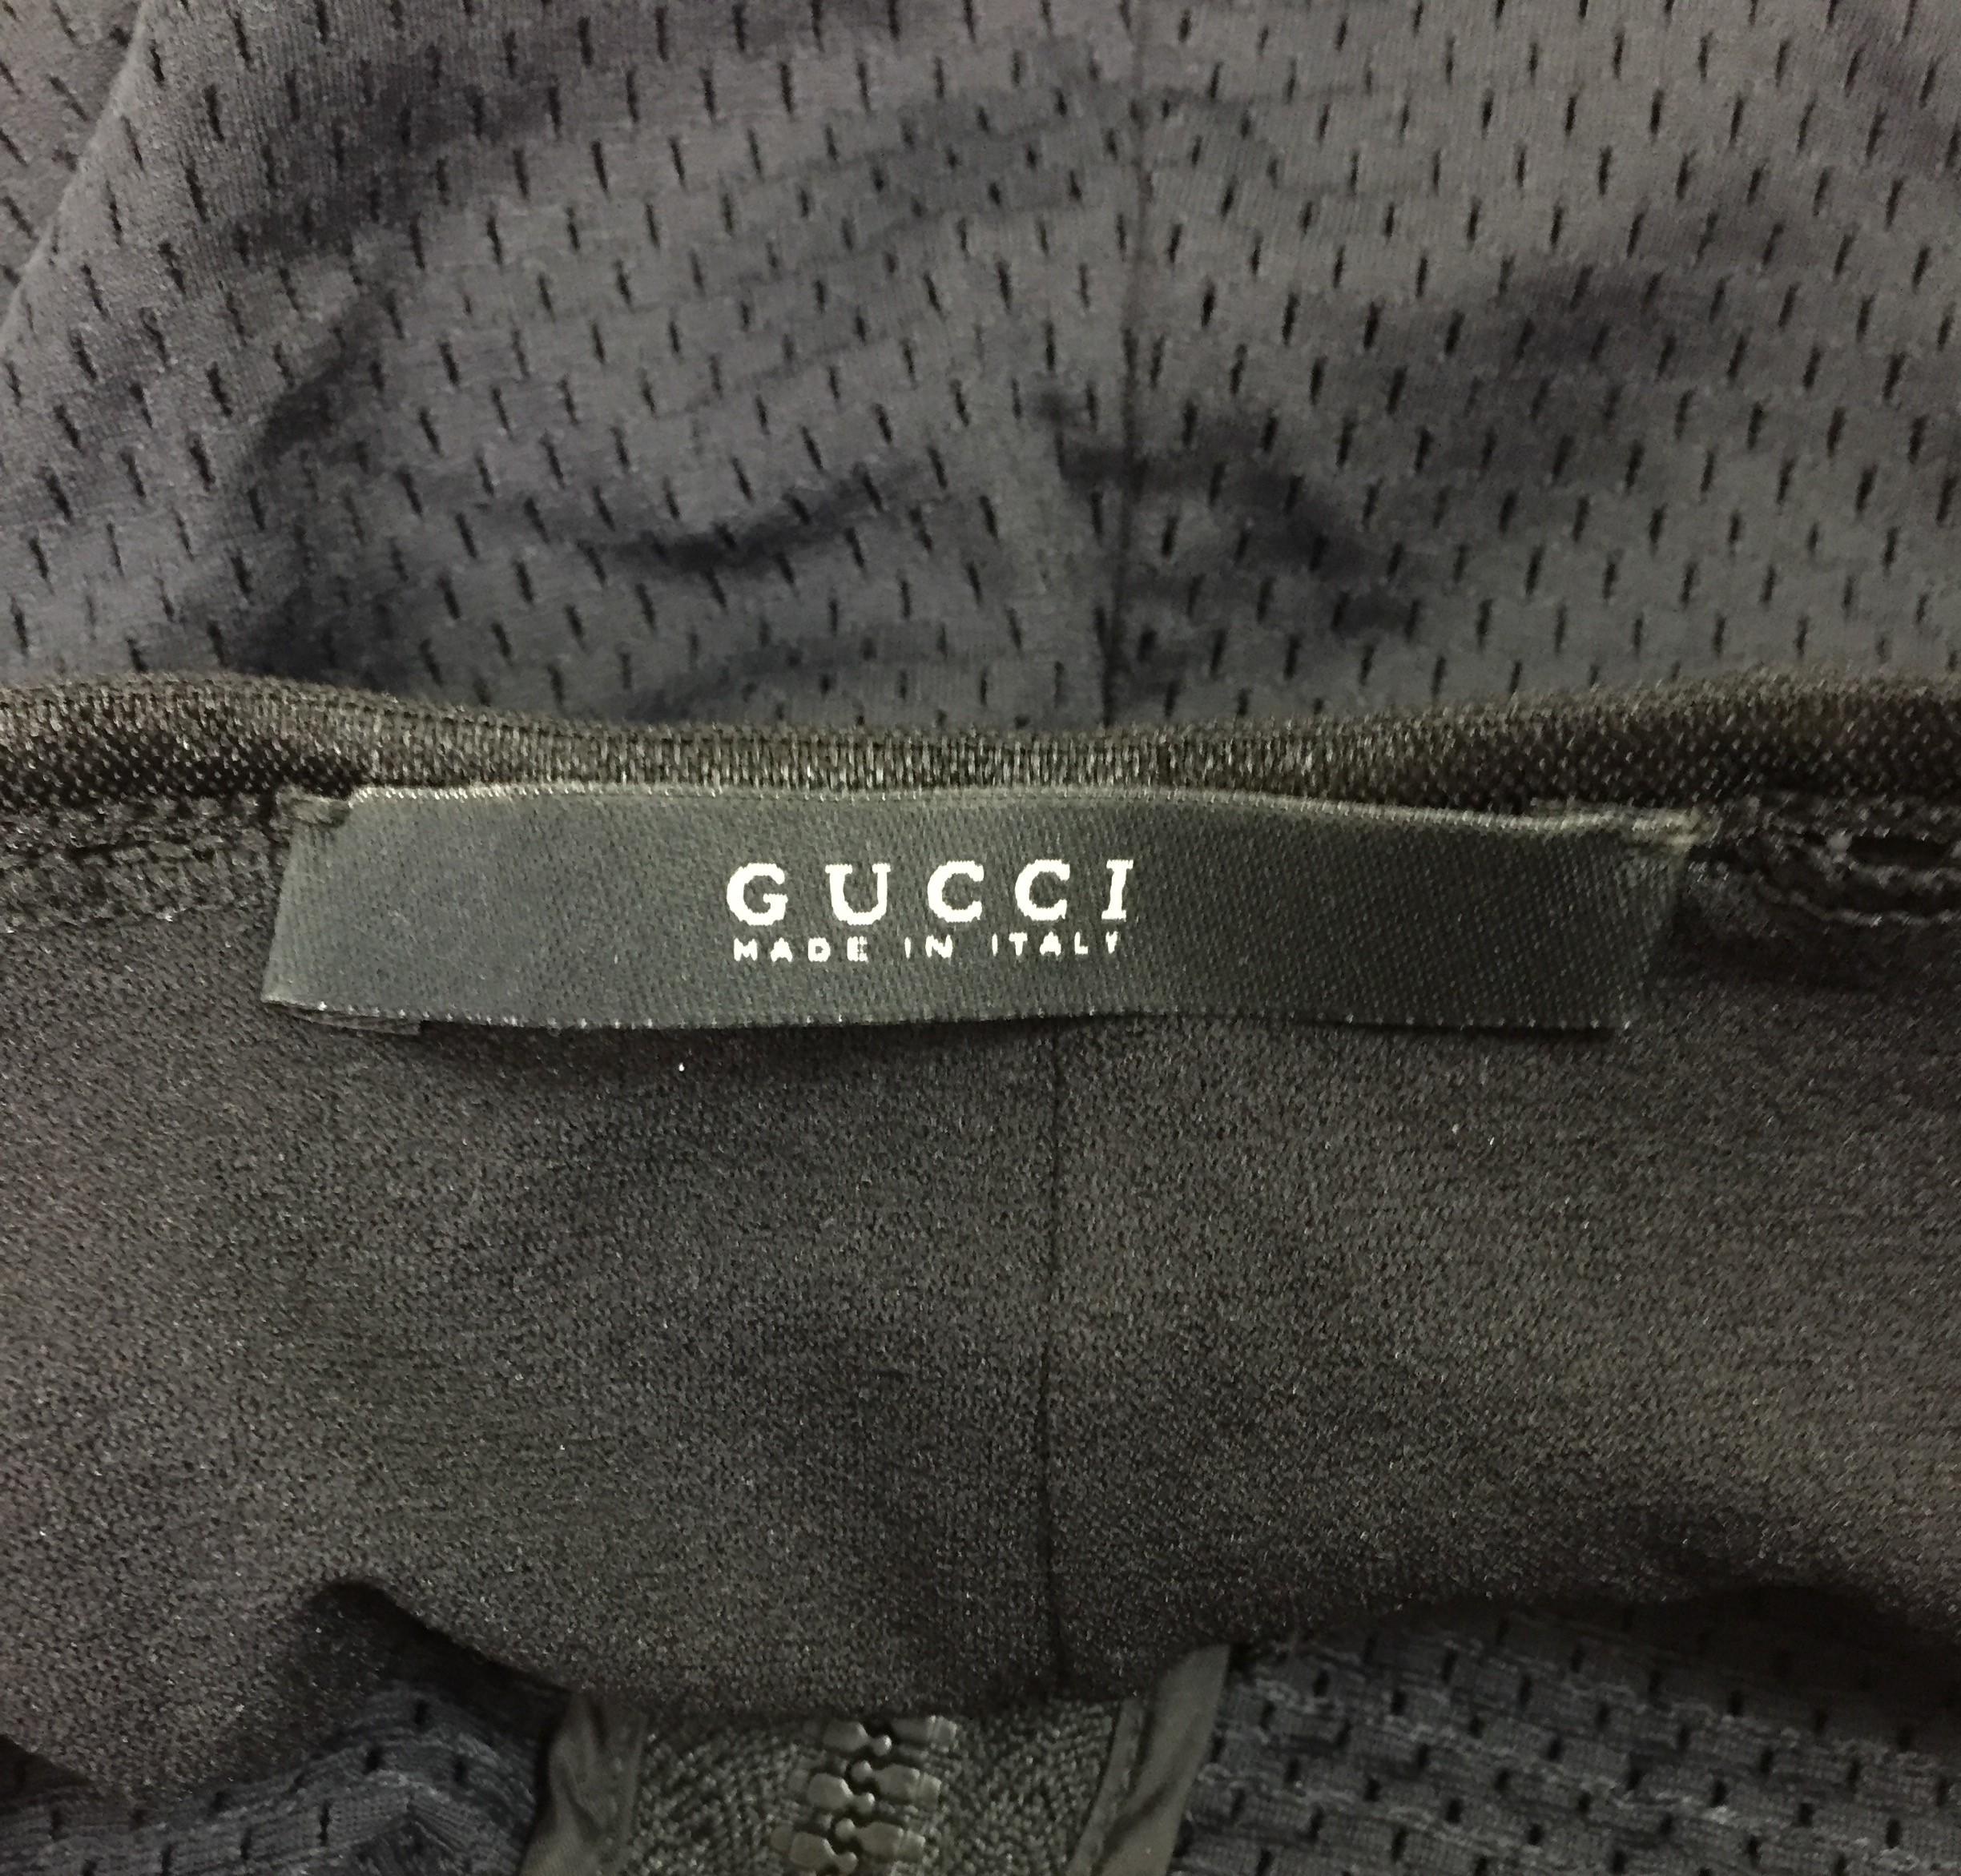 S/S 2002 Gucci Tom Ford Black Mesh Plunging Zipper Bodysuit & Shorts Set 2